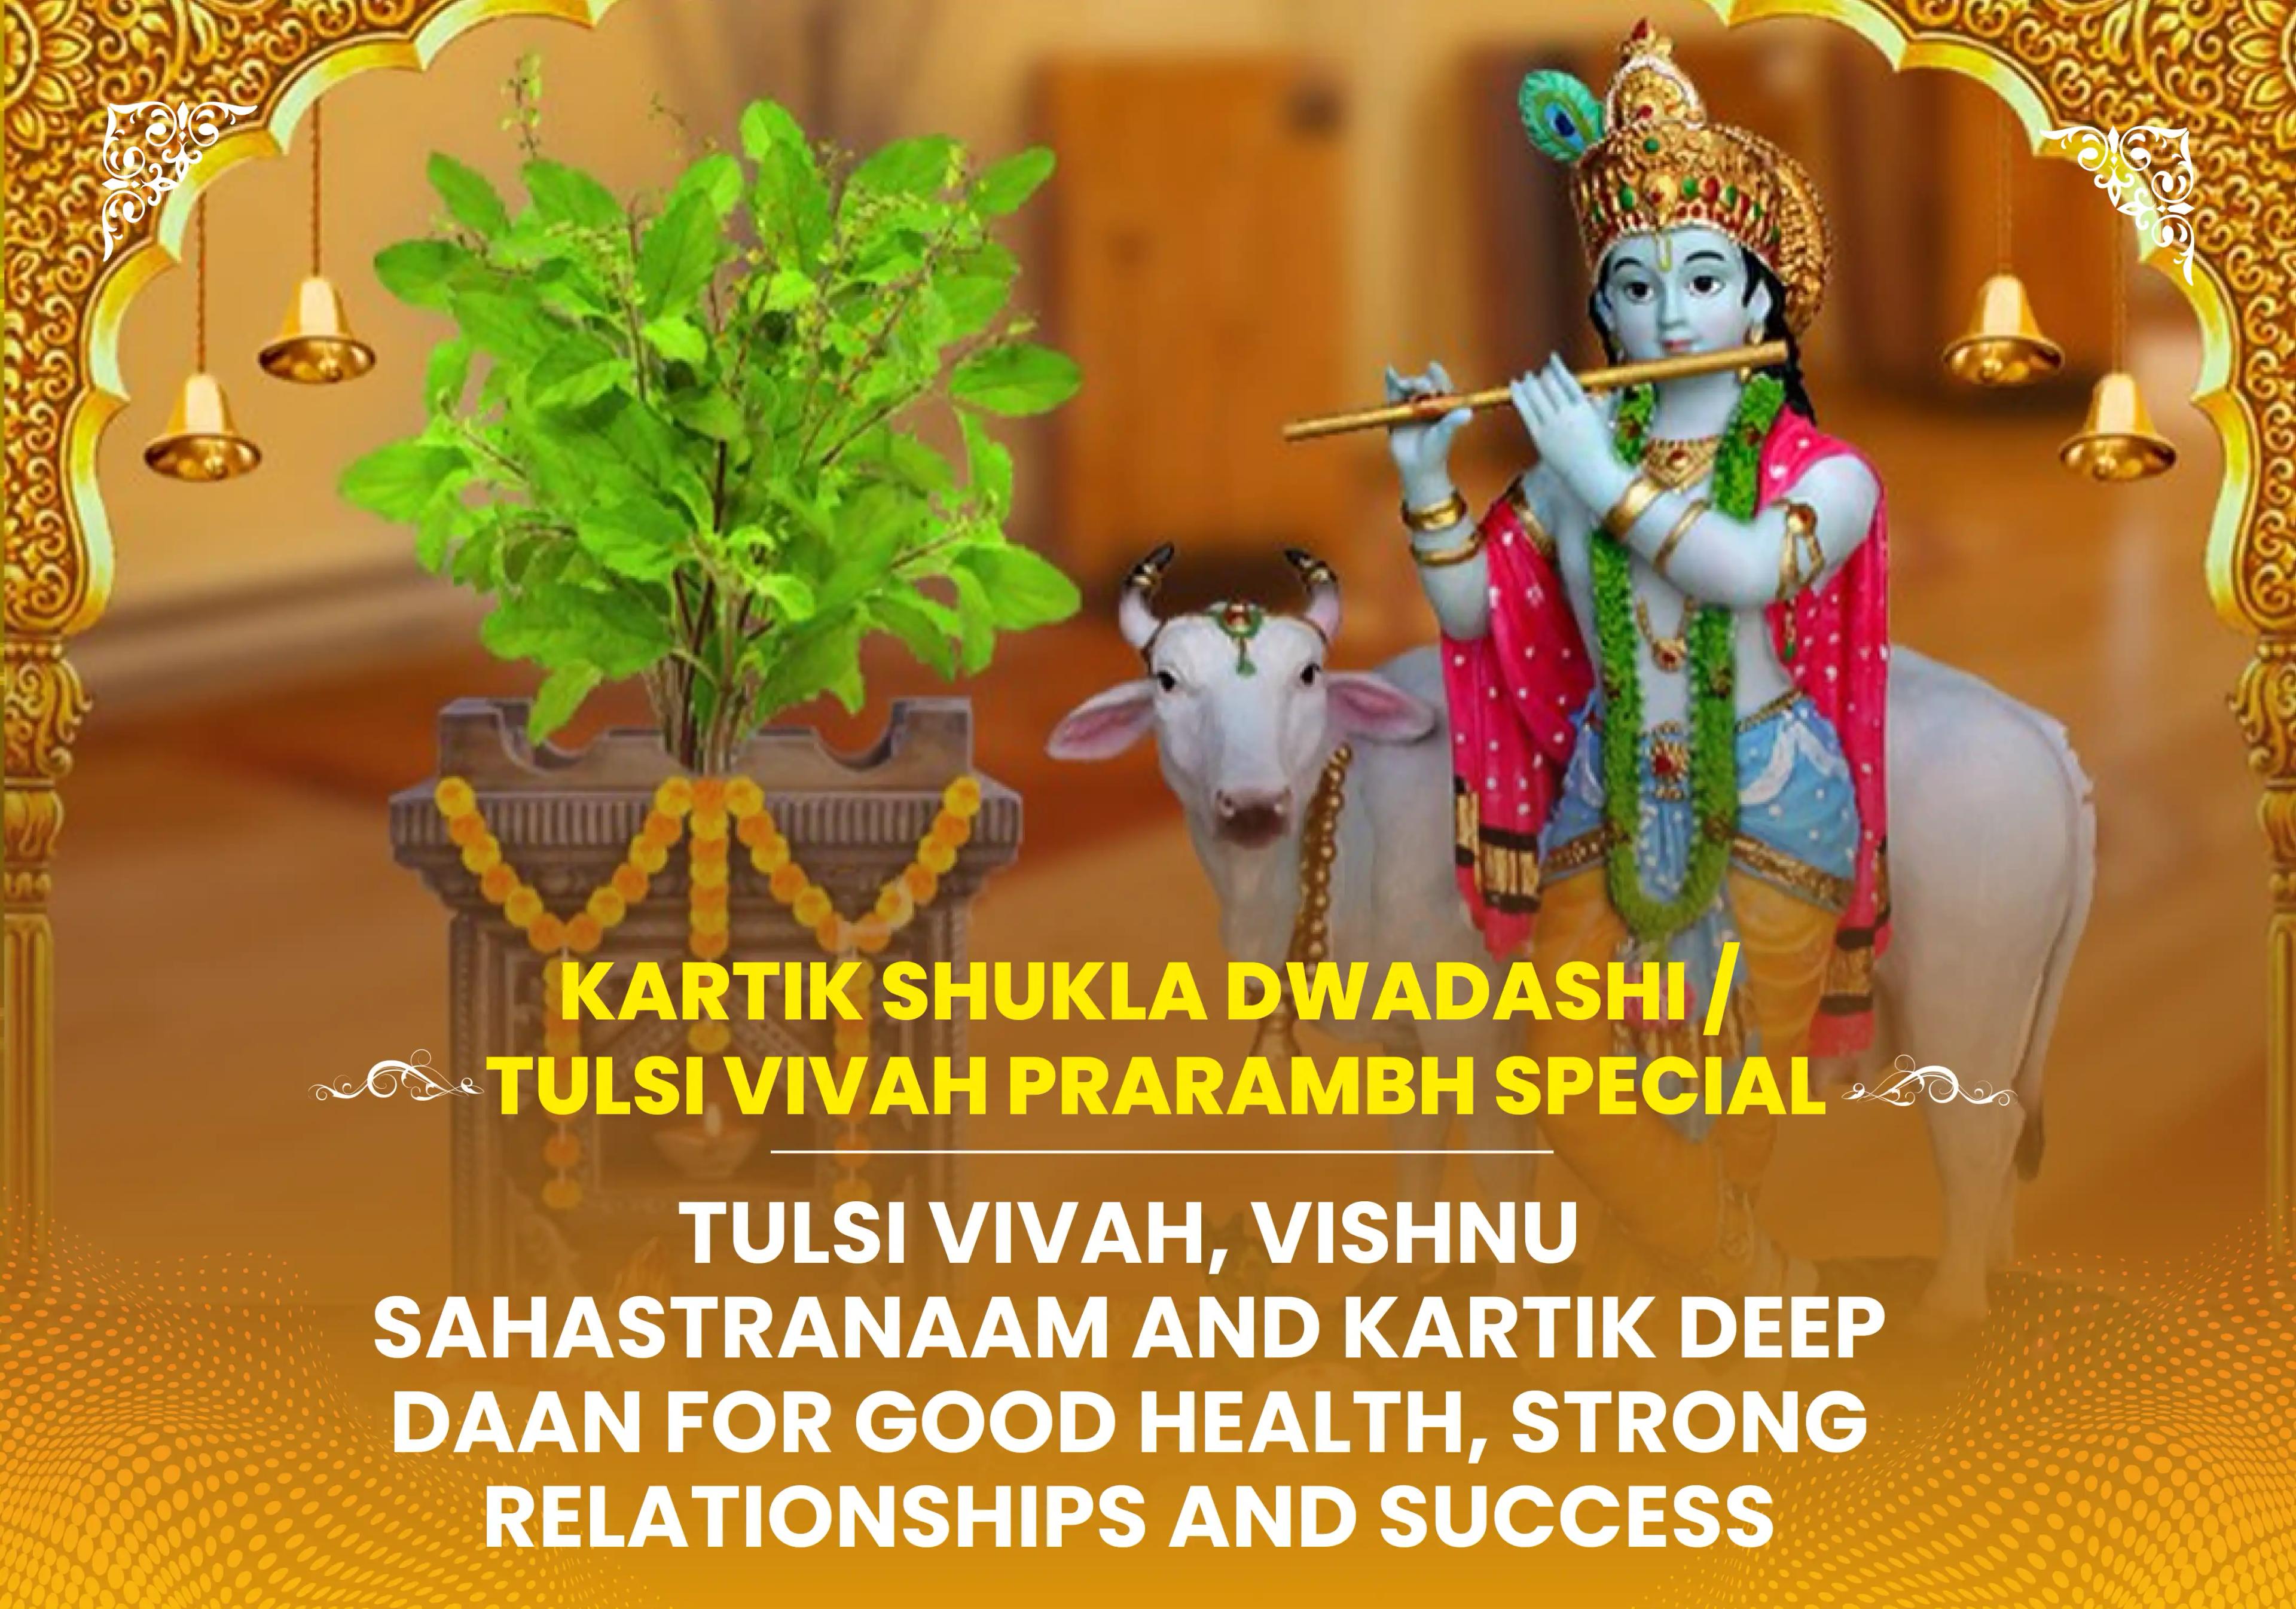 Tulsi Vivah, Vishnu Sahastranaam and Kartik Deep Daan for Good Health, Strong Relationships and Success